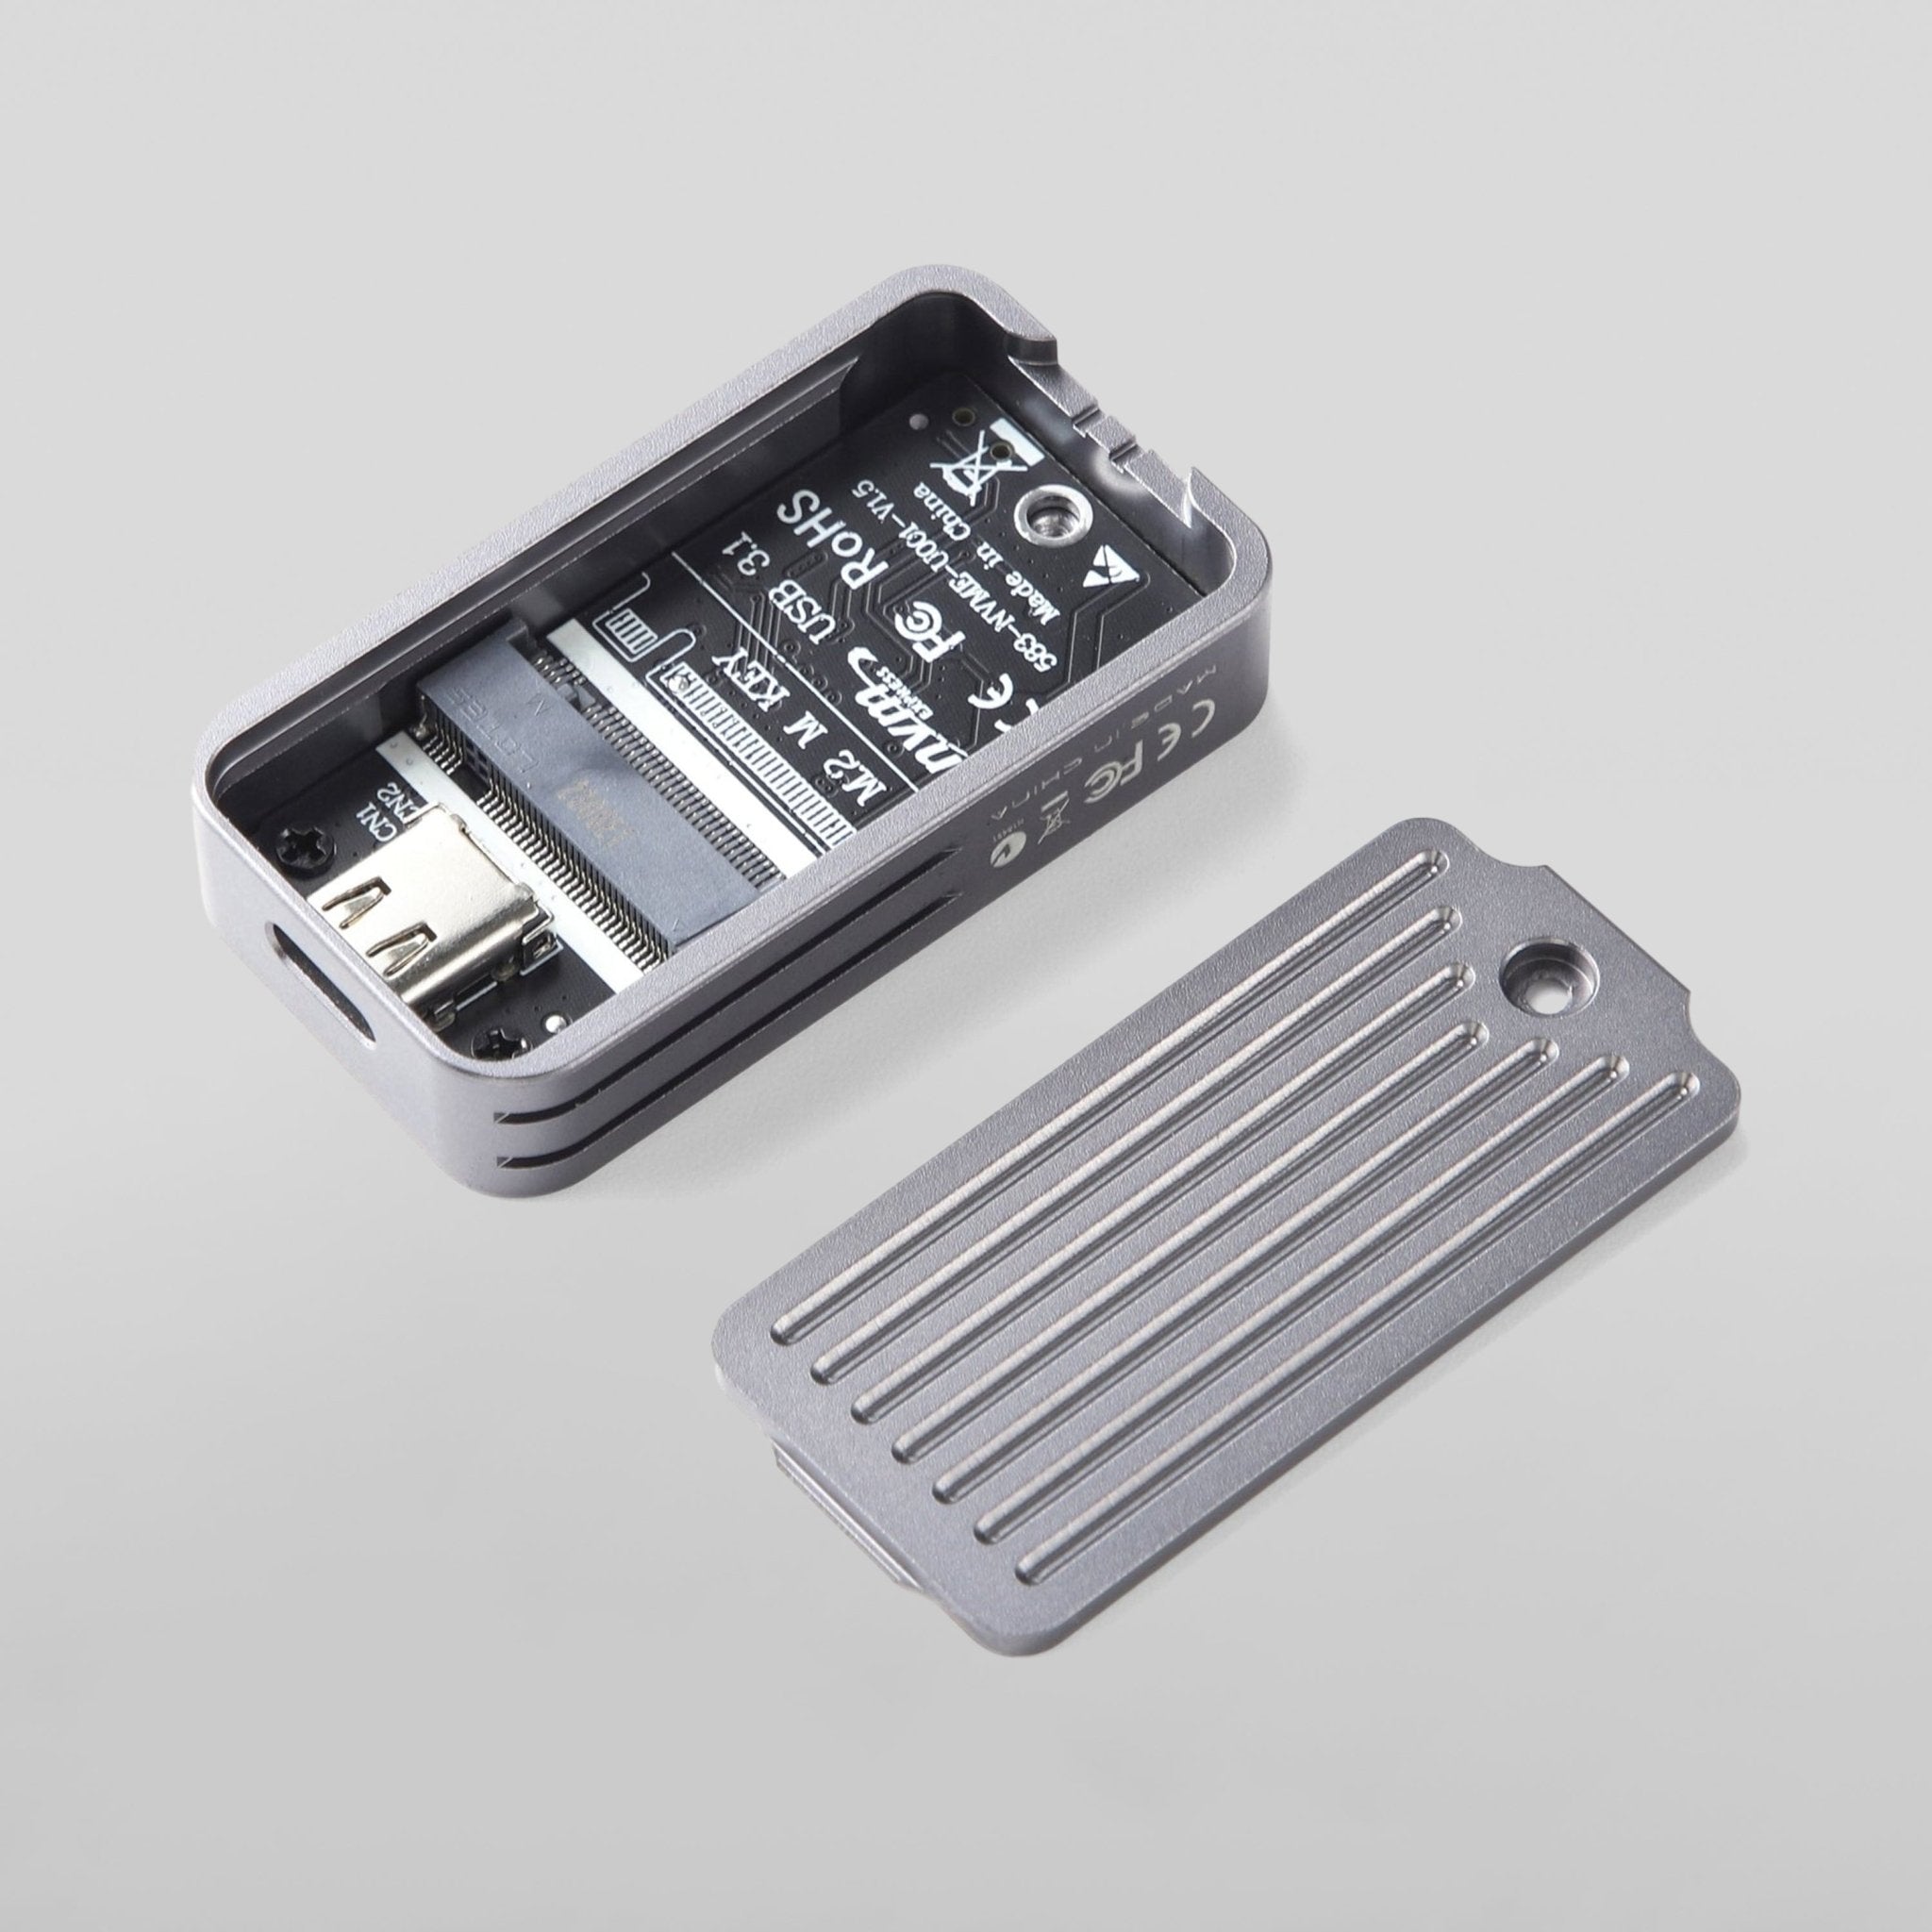 Carcasa de SSD M.2 NVMe 2230, adaptador NVMe a USB, 10gbps, USB 3,2 Gen2,  USB C, caja externa para M2 2230 NVMe SN740/SN530/PM991a ssd 2230 enclosure  2242 NVMe carcasa ssd